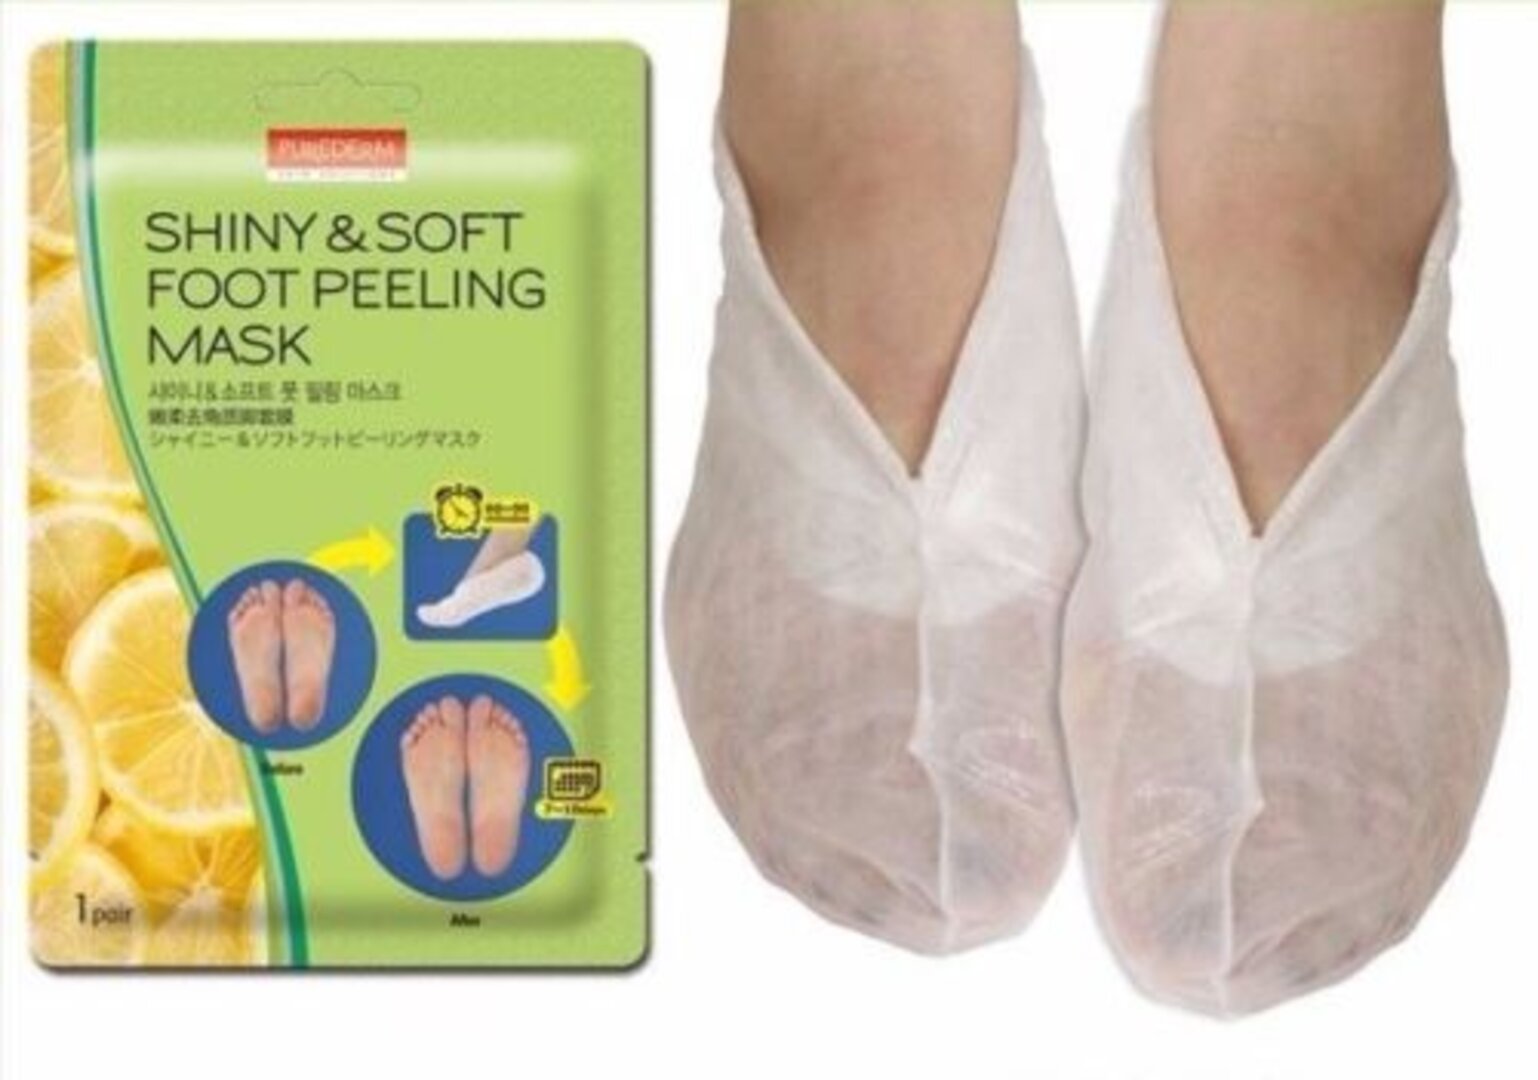 Shiny & Soft Foot Peeling Mask 1 pair